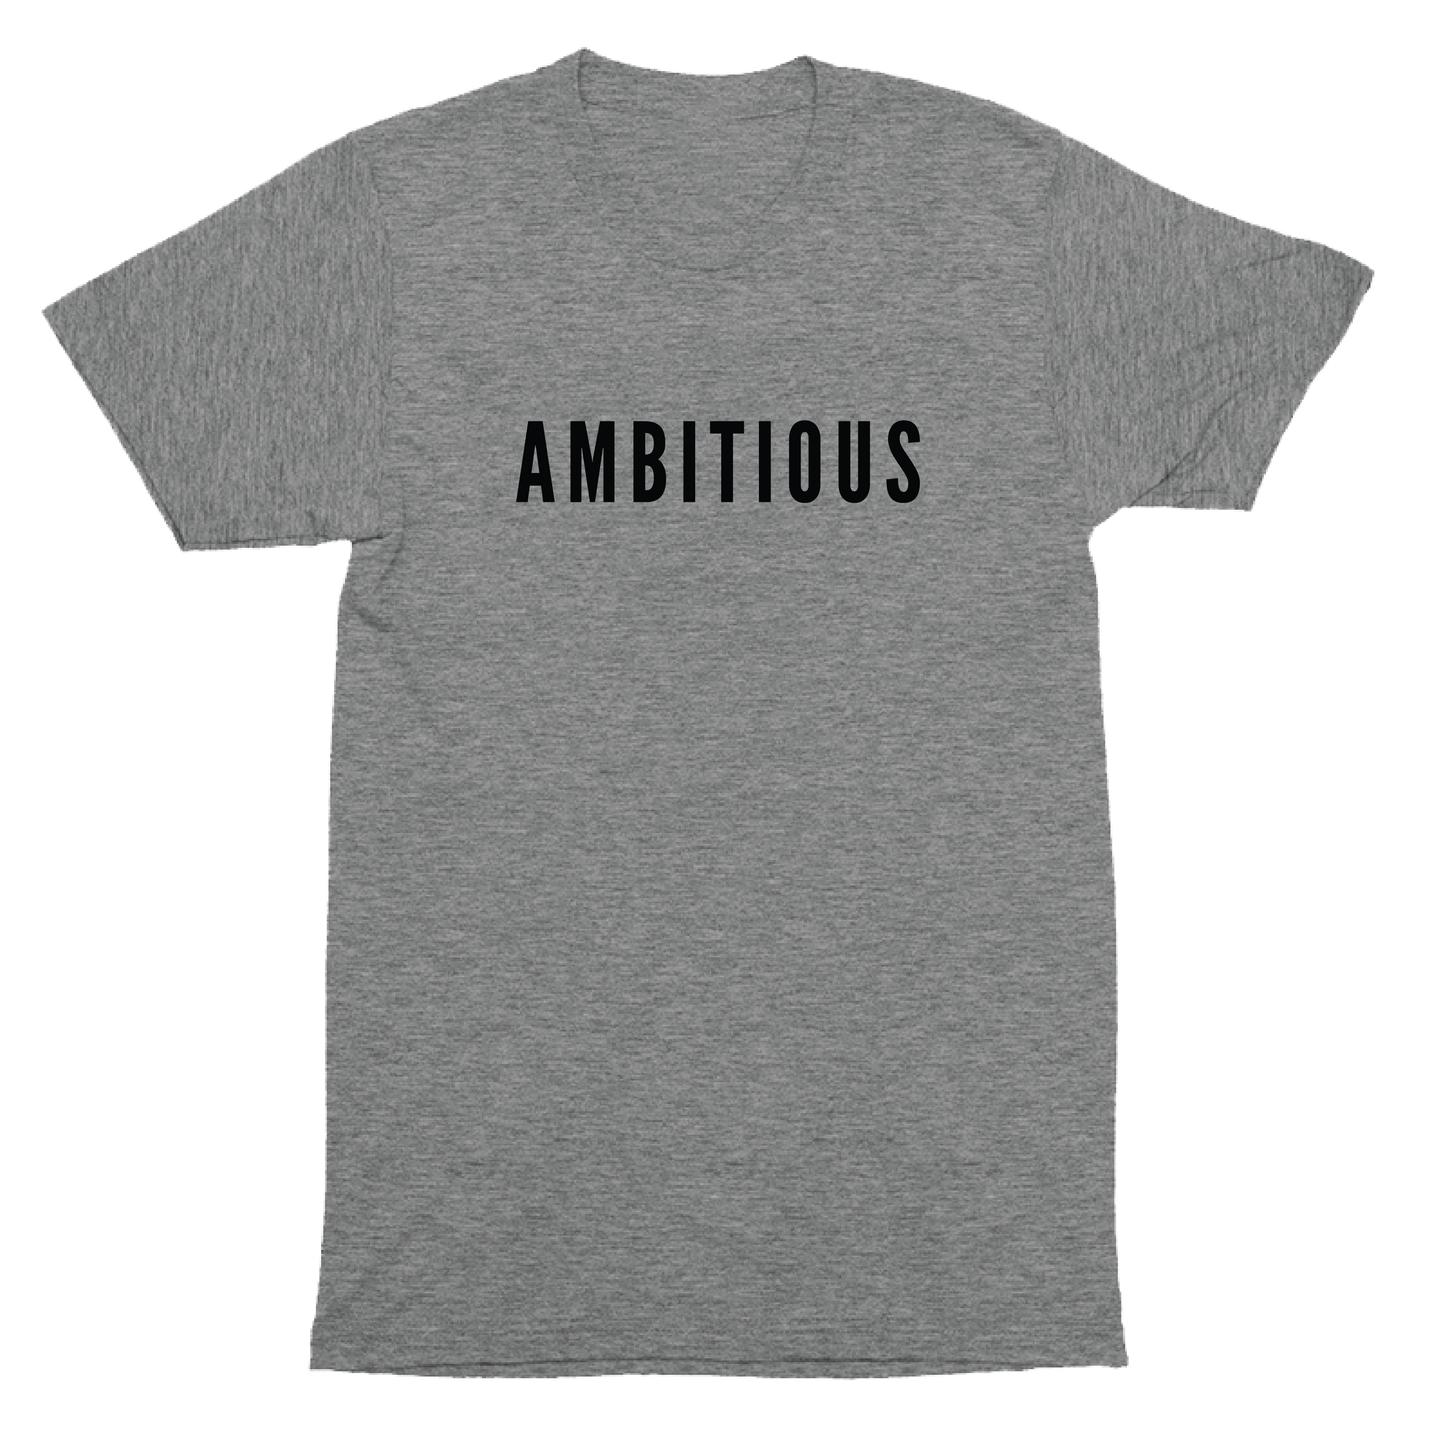 Ambitious T-Shirt